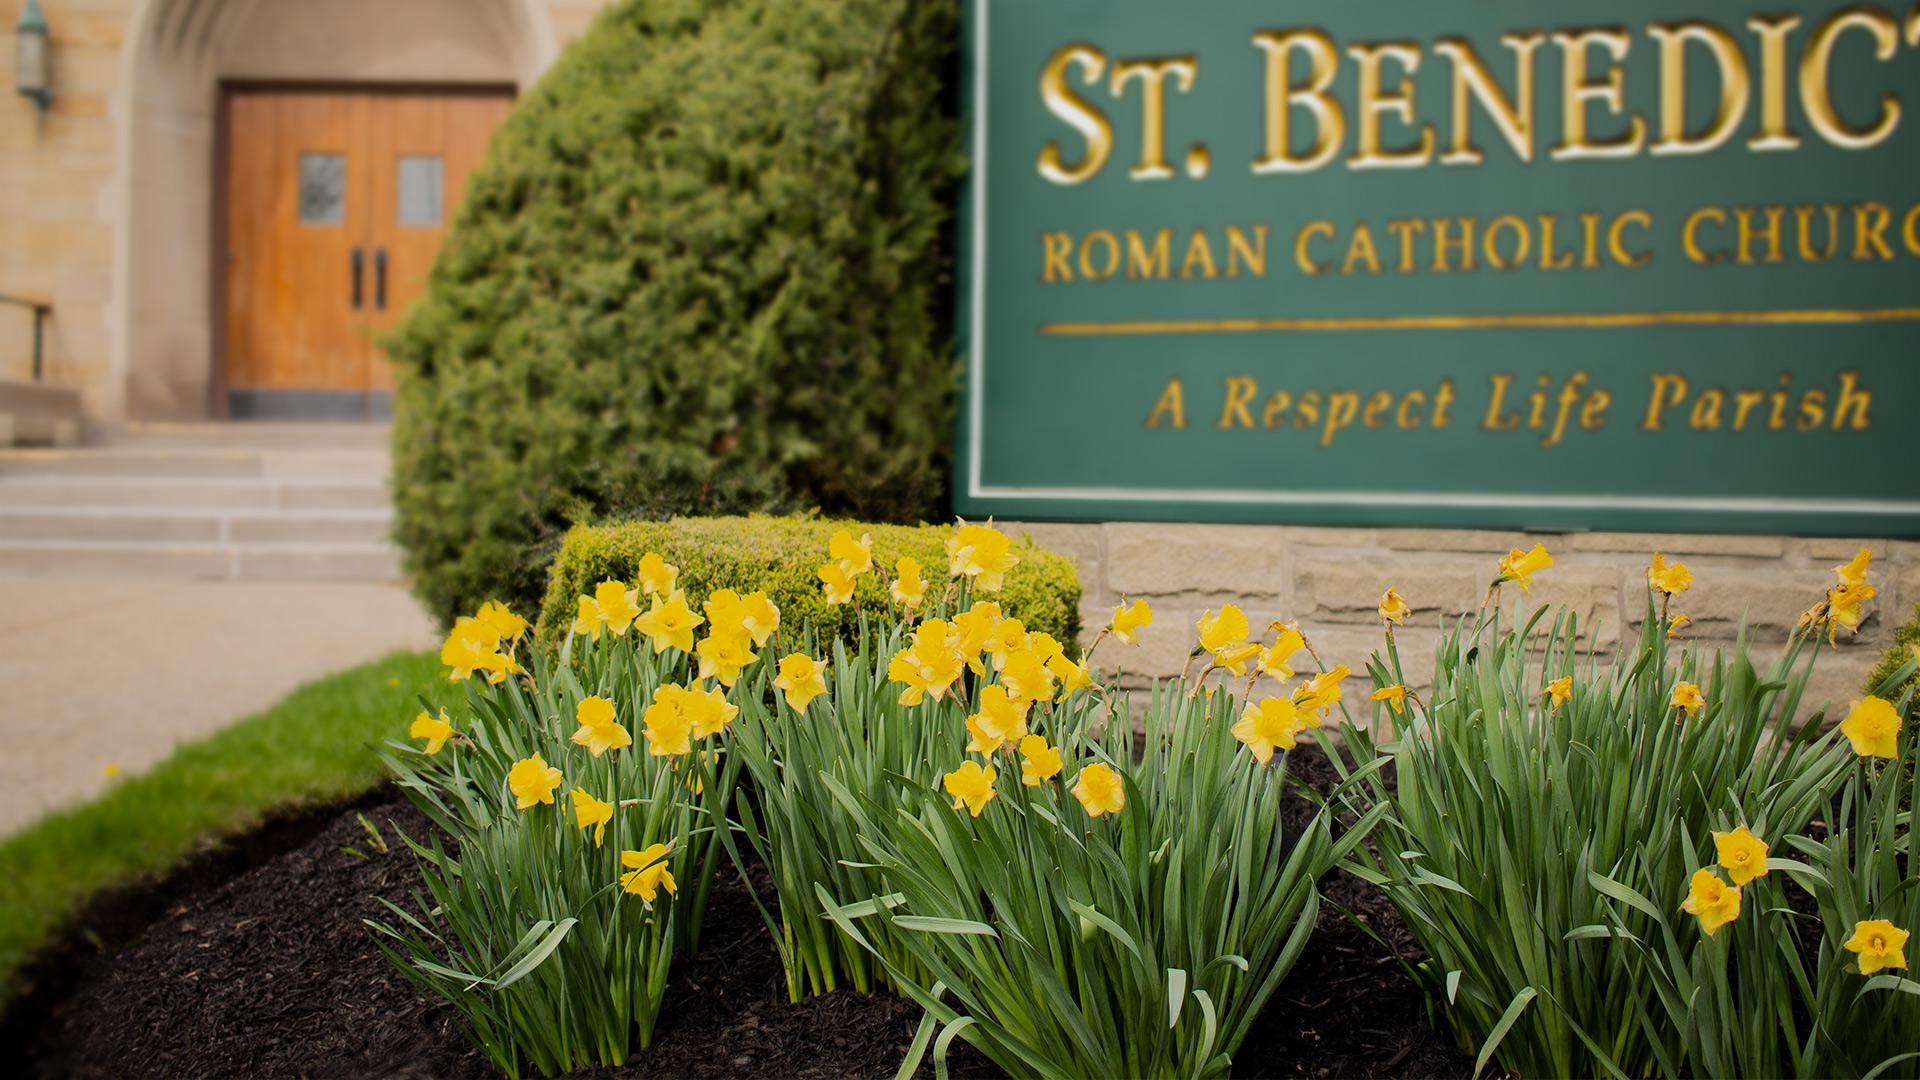 Saint Benedict Roman Catholic Church: A Respect Life Parish